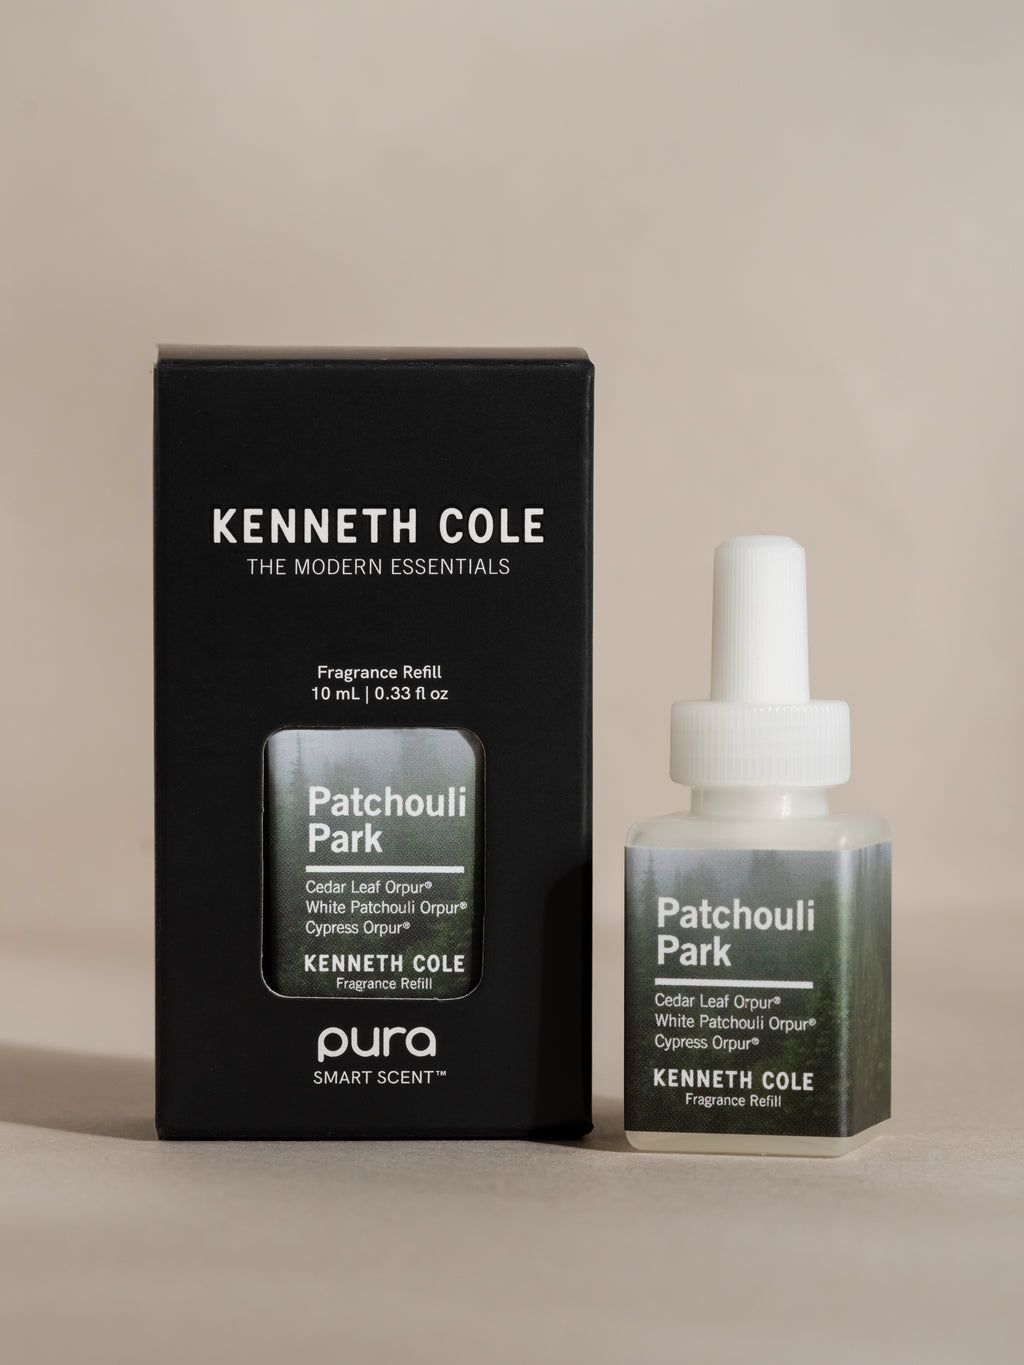 Pura x Kenneth Cole Aim to Teas Smart Home Fragrance Refill